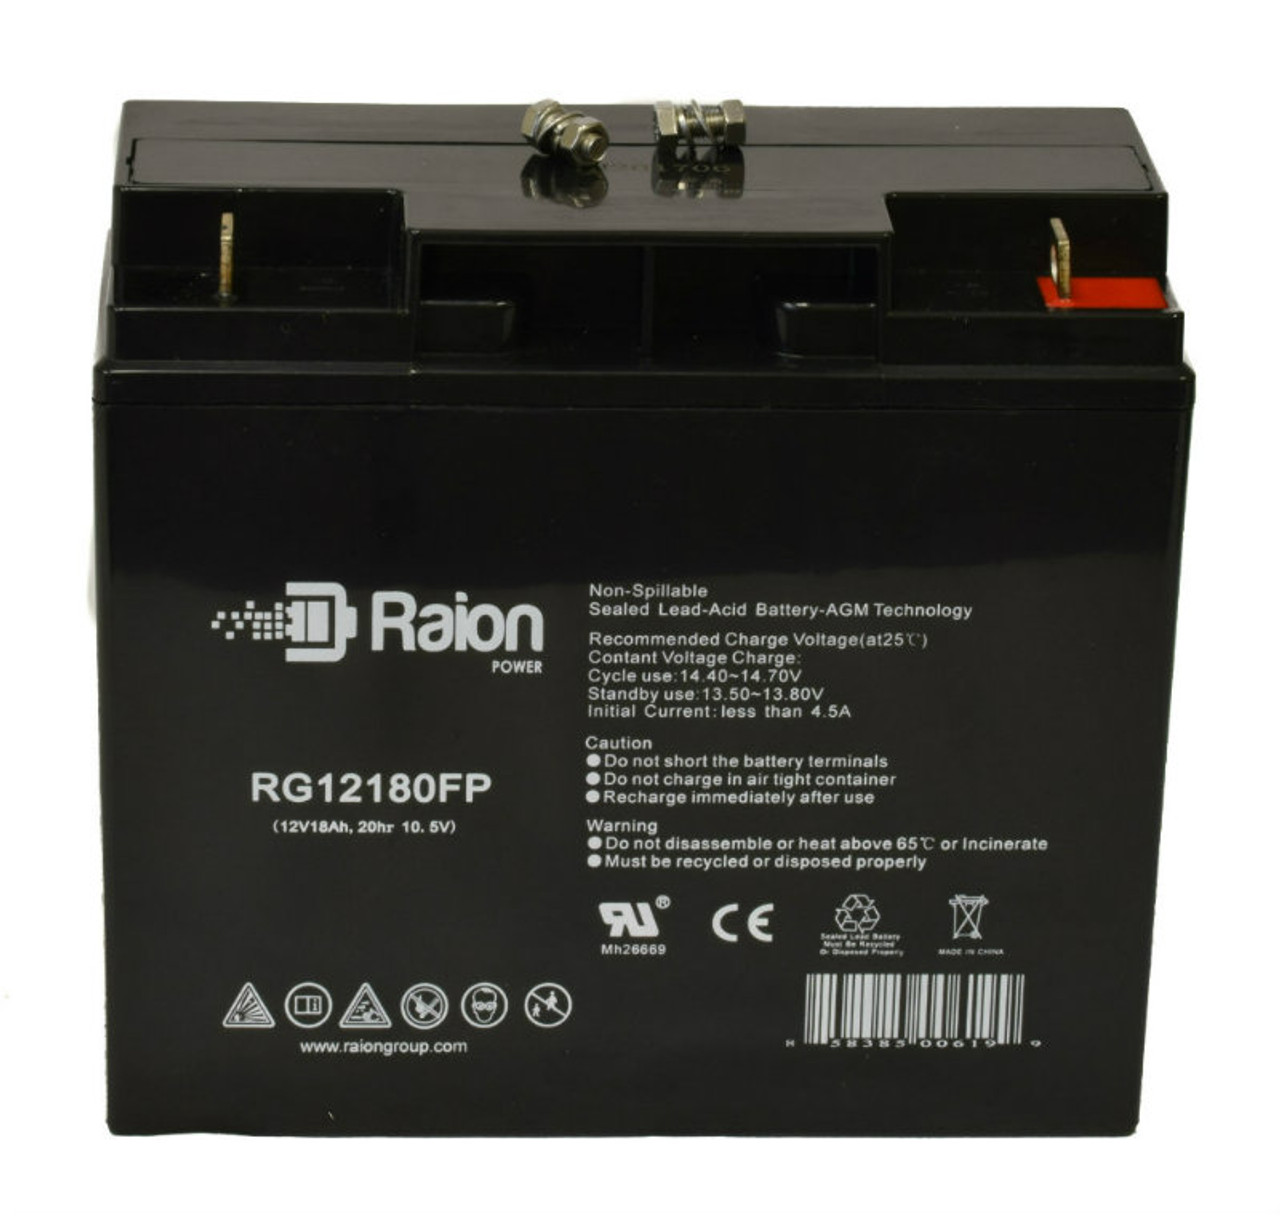 Raion Power RG12180FP 12V 18Ah Lead Acid Battery for Big Beam 2IL12S15